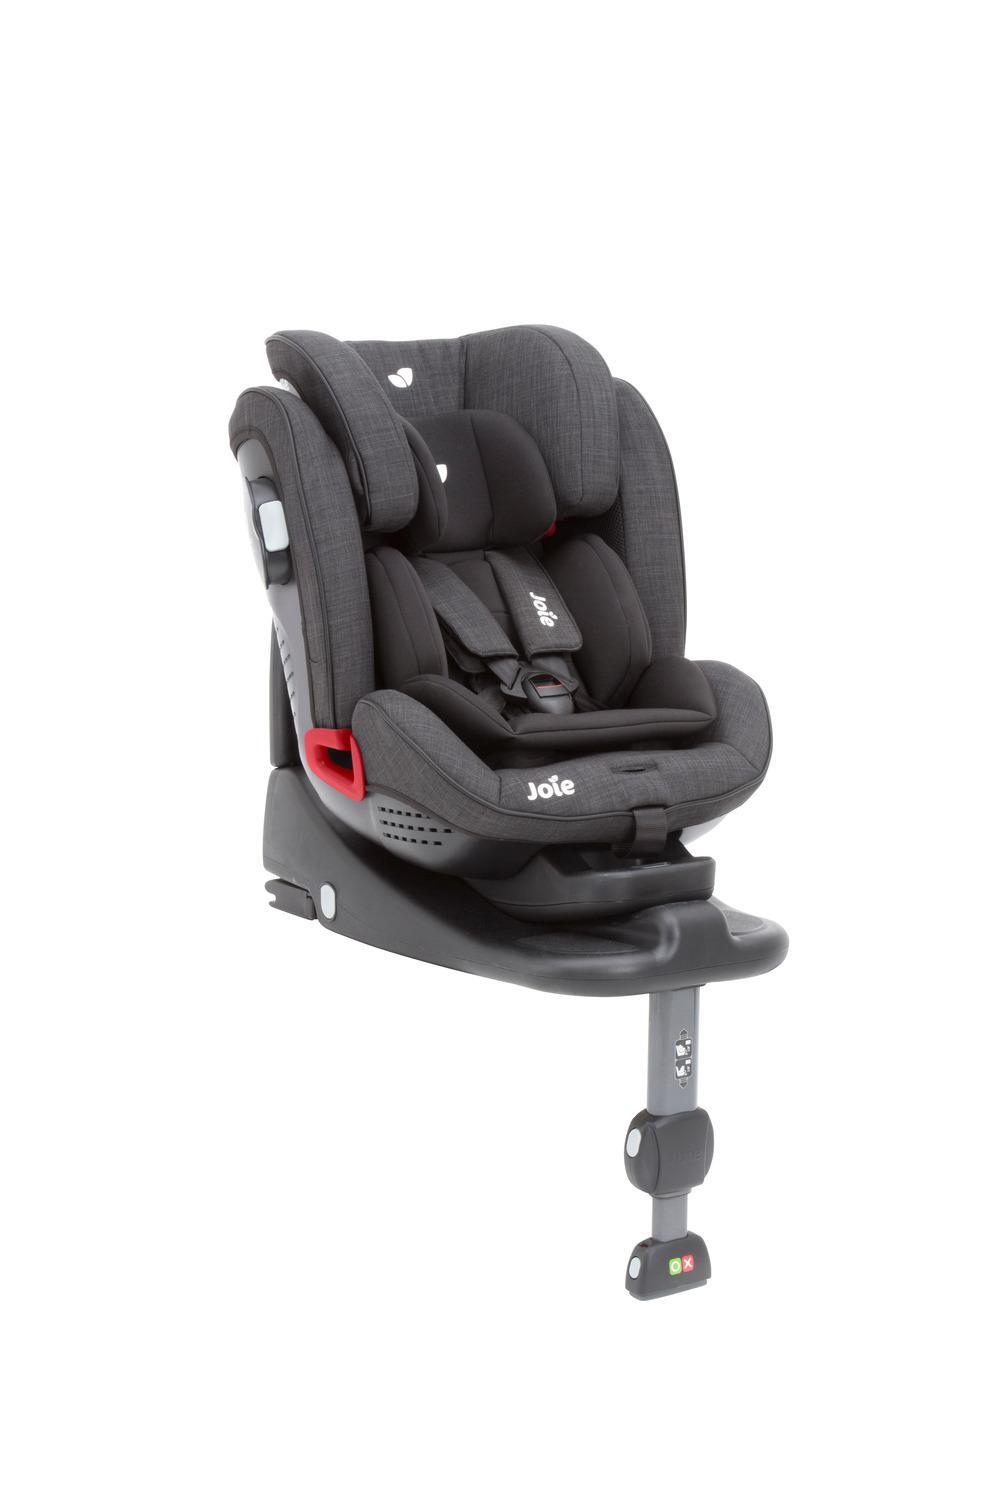 beneden Vader chocola Joie Stages Isofix car seat (0-25kg) Pavement | NordBaby™